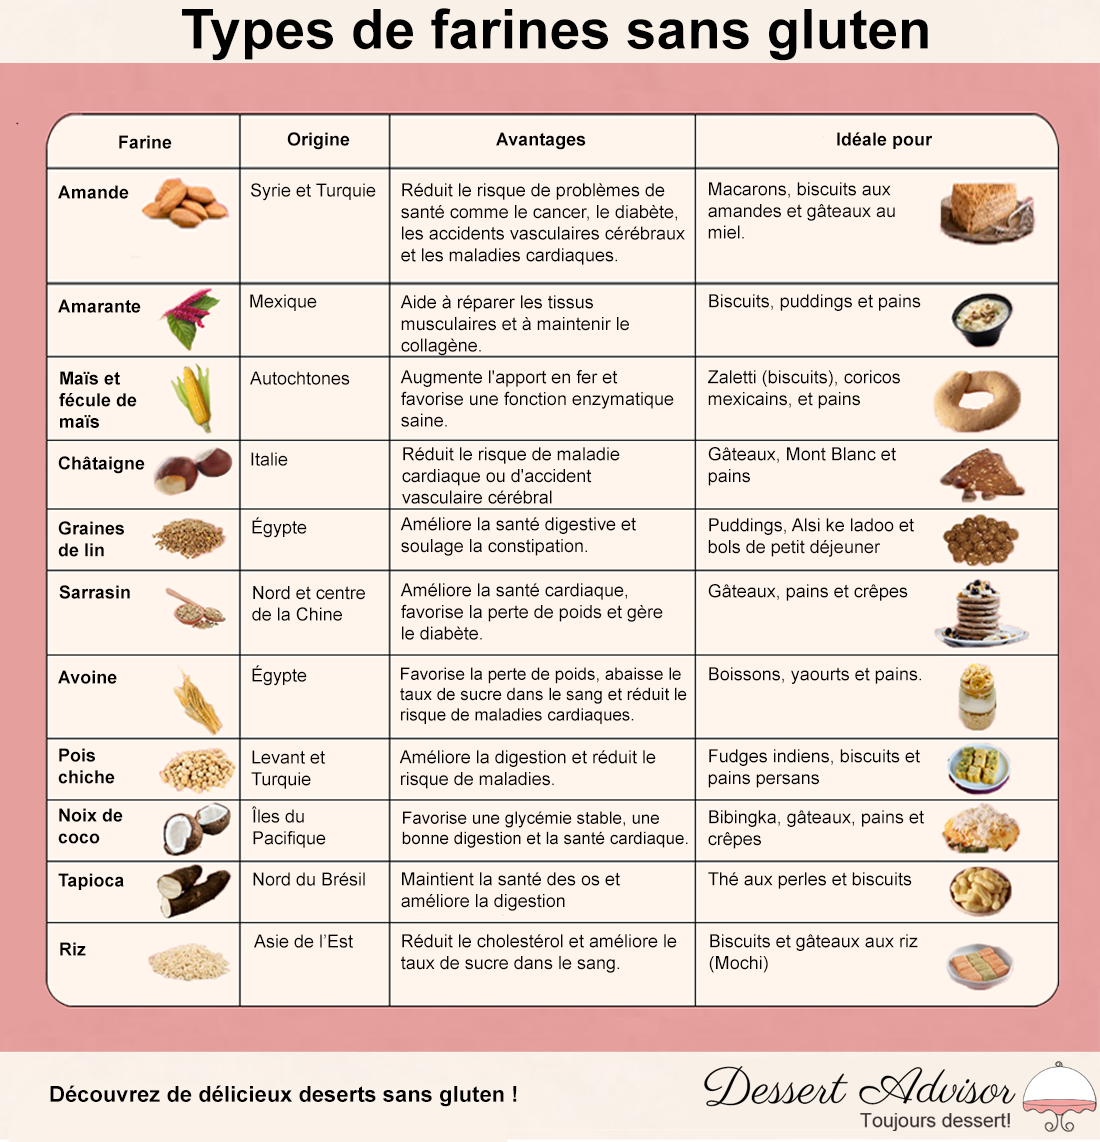 Table de types de farines sans gluten